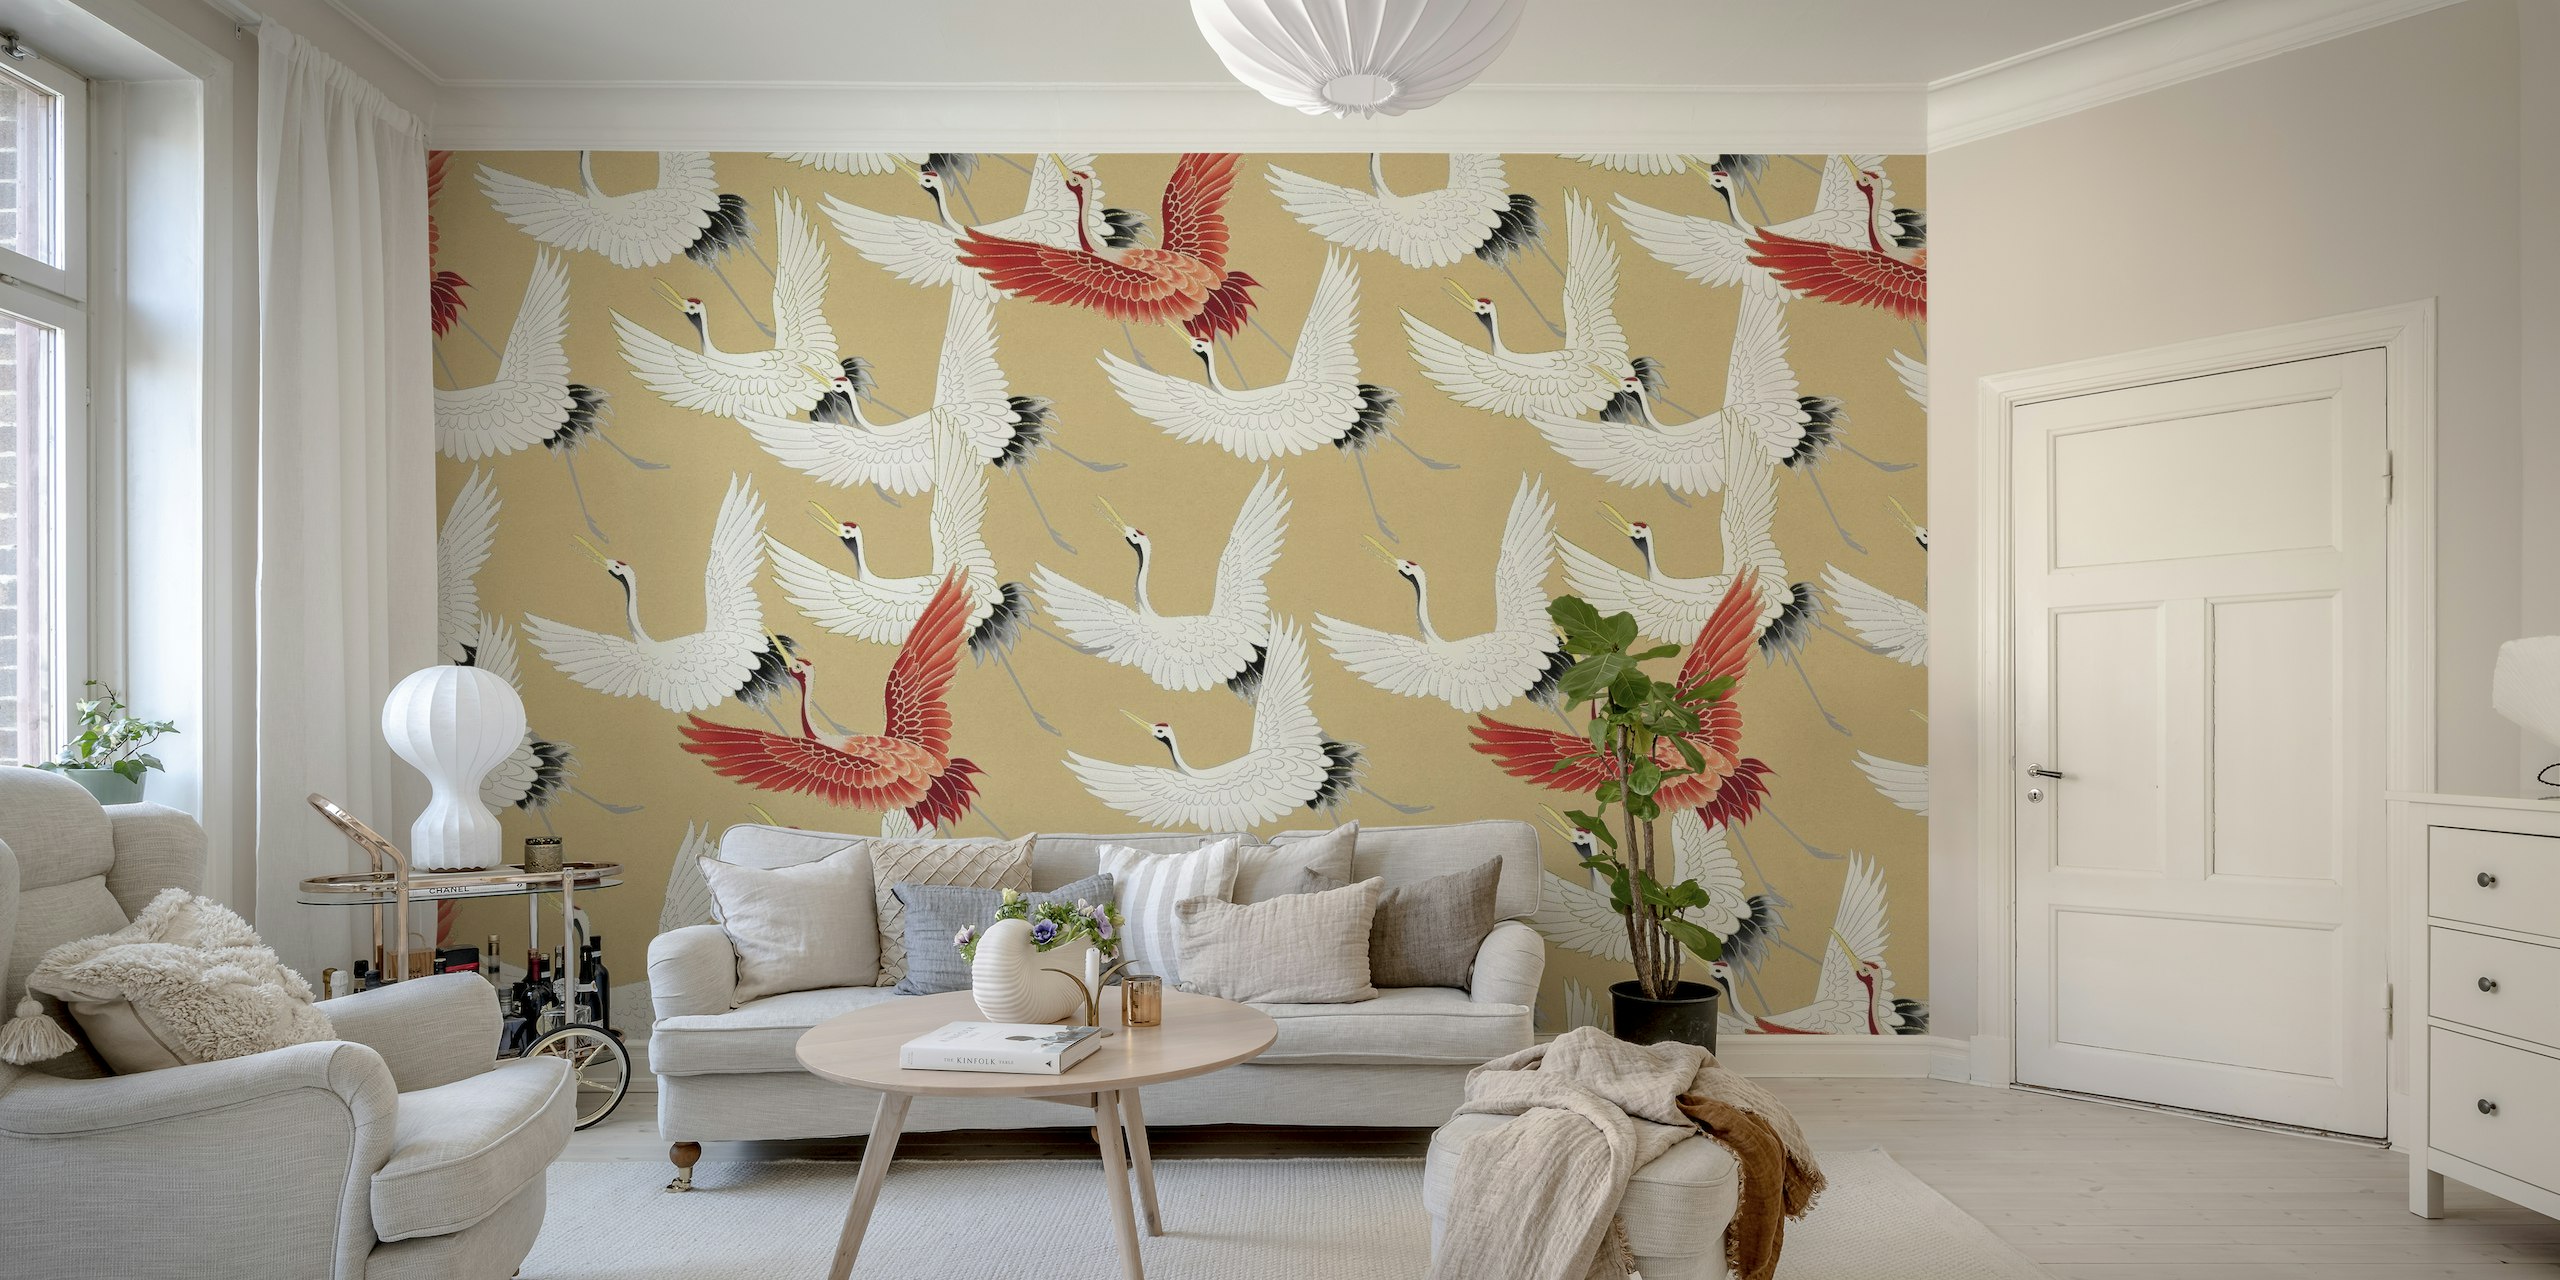 Japanski ždralovi 5 zidni mural s pticama u letu na bež pozadini